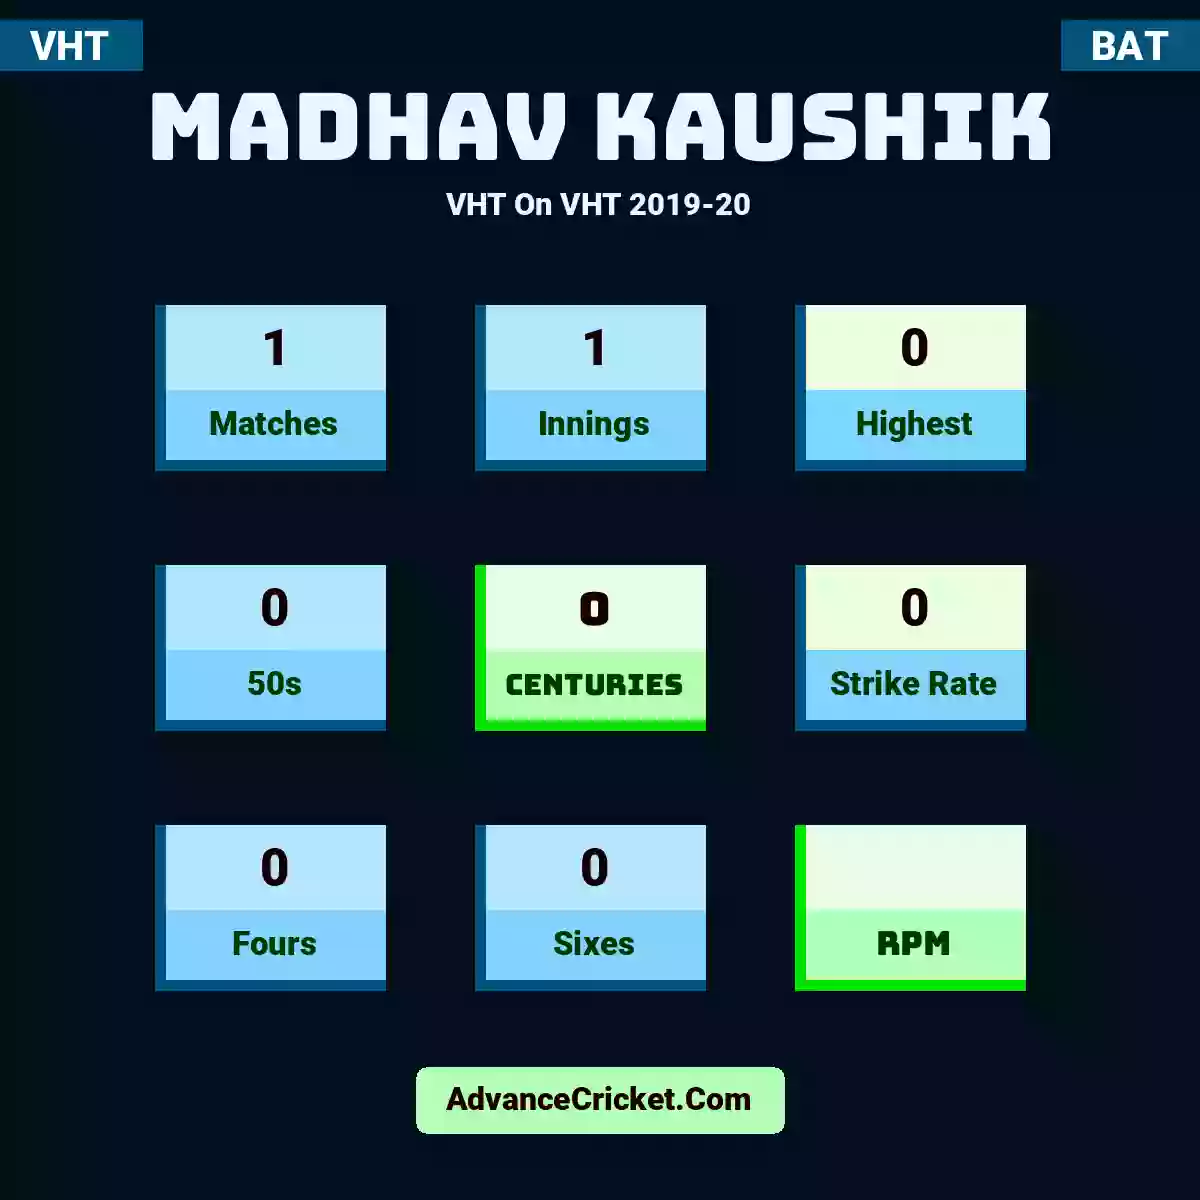 Madhav Kaushik VHT  On VHT 2019-20, Madhav Kaushik played 1 matches, scored 0 runs as highest, 0 half-centuries, and 0 centuries, with a strike rate of 0. M.Kaushik hit 0 fours and 0 sixes.